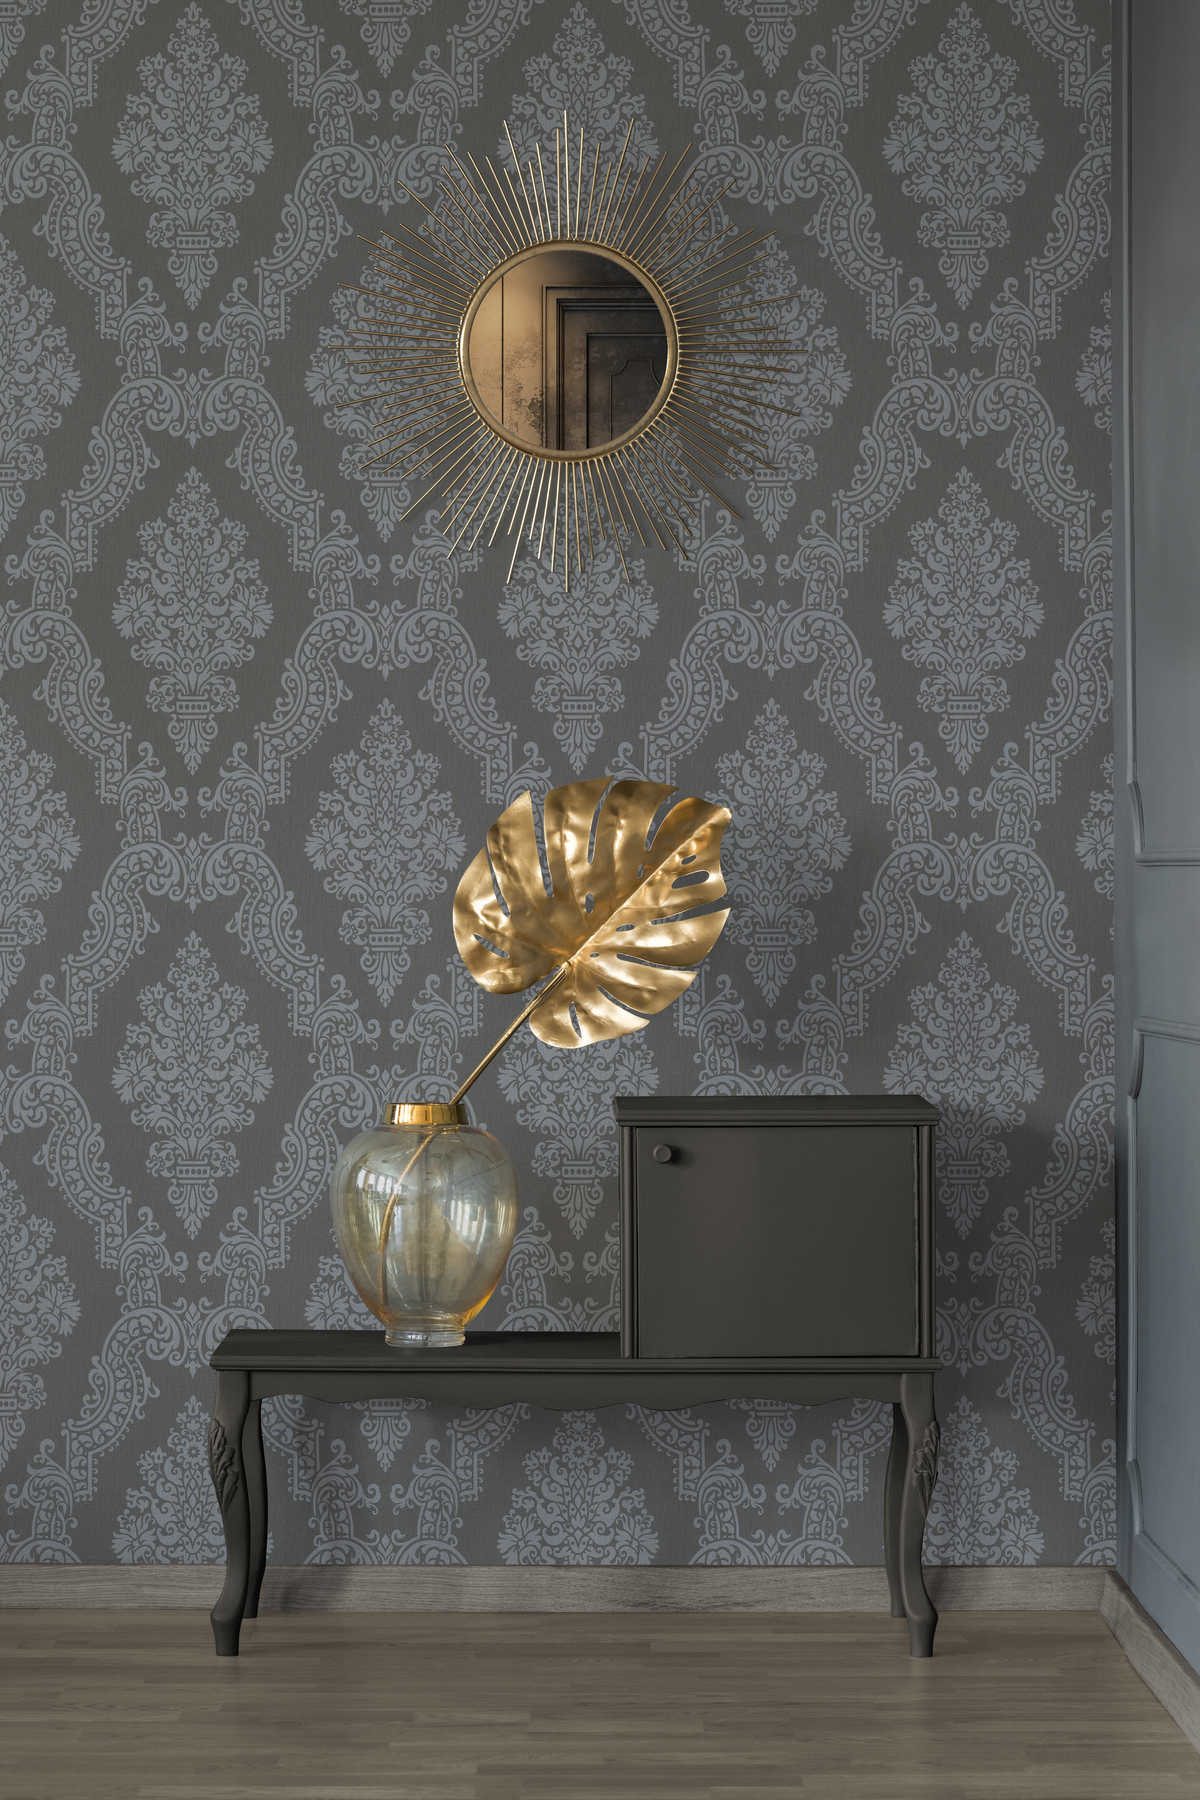             Klassische Ornament-Tapete mit floralem Muster – Grau
        